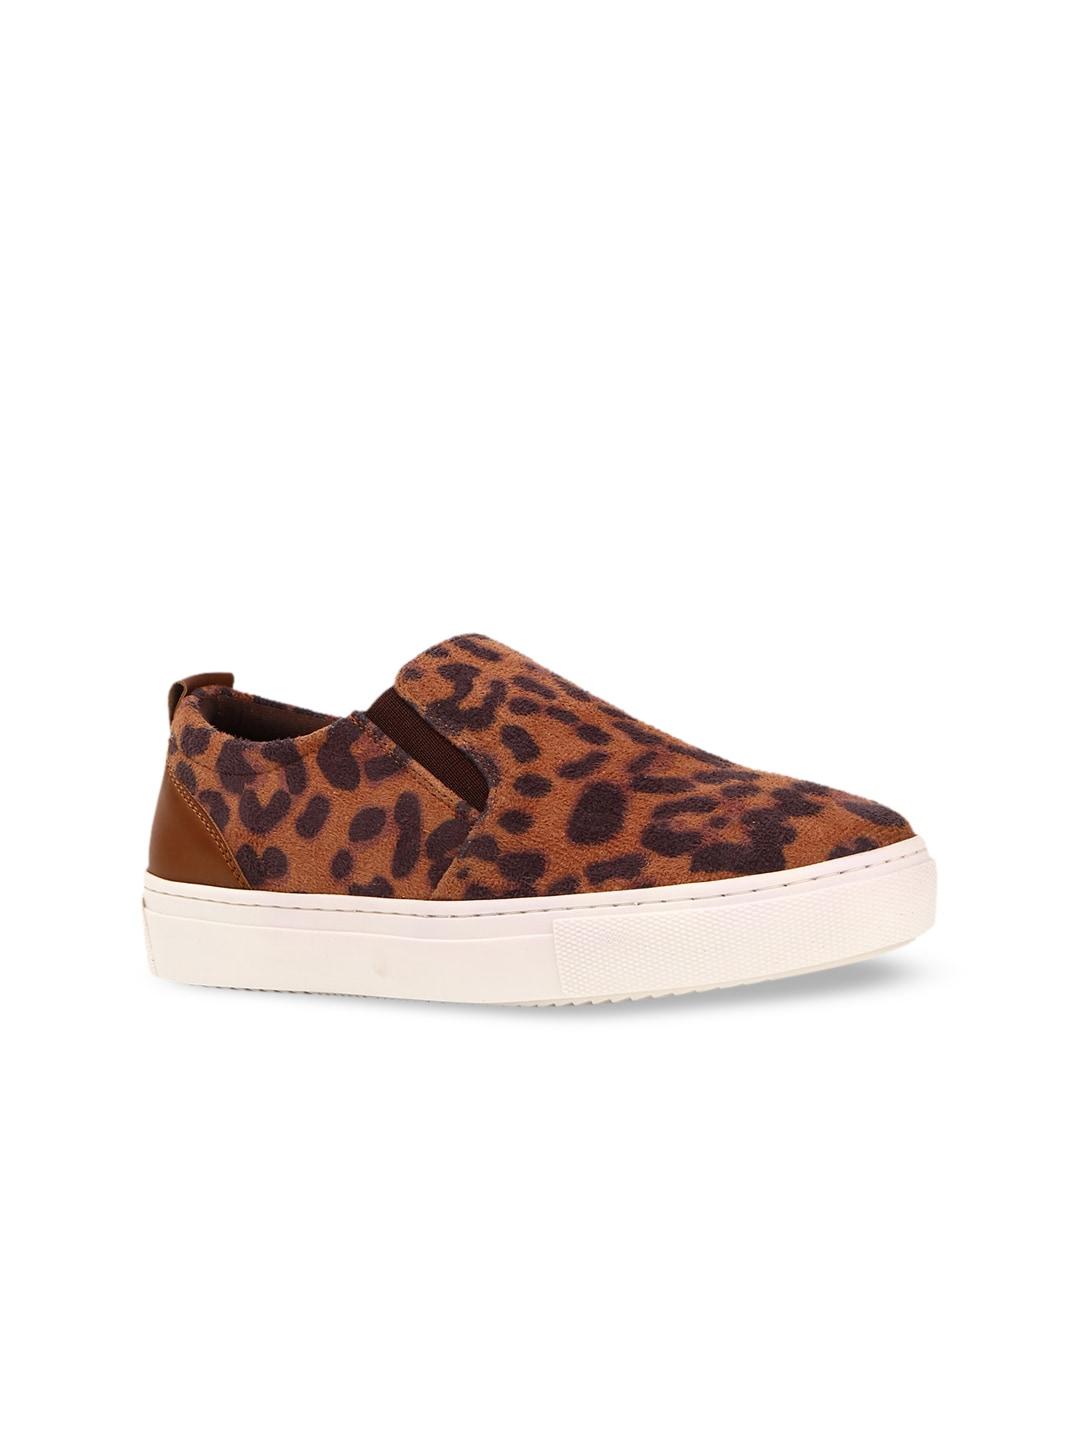 forever 21 women brown leopard printed slip-on sneakers